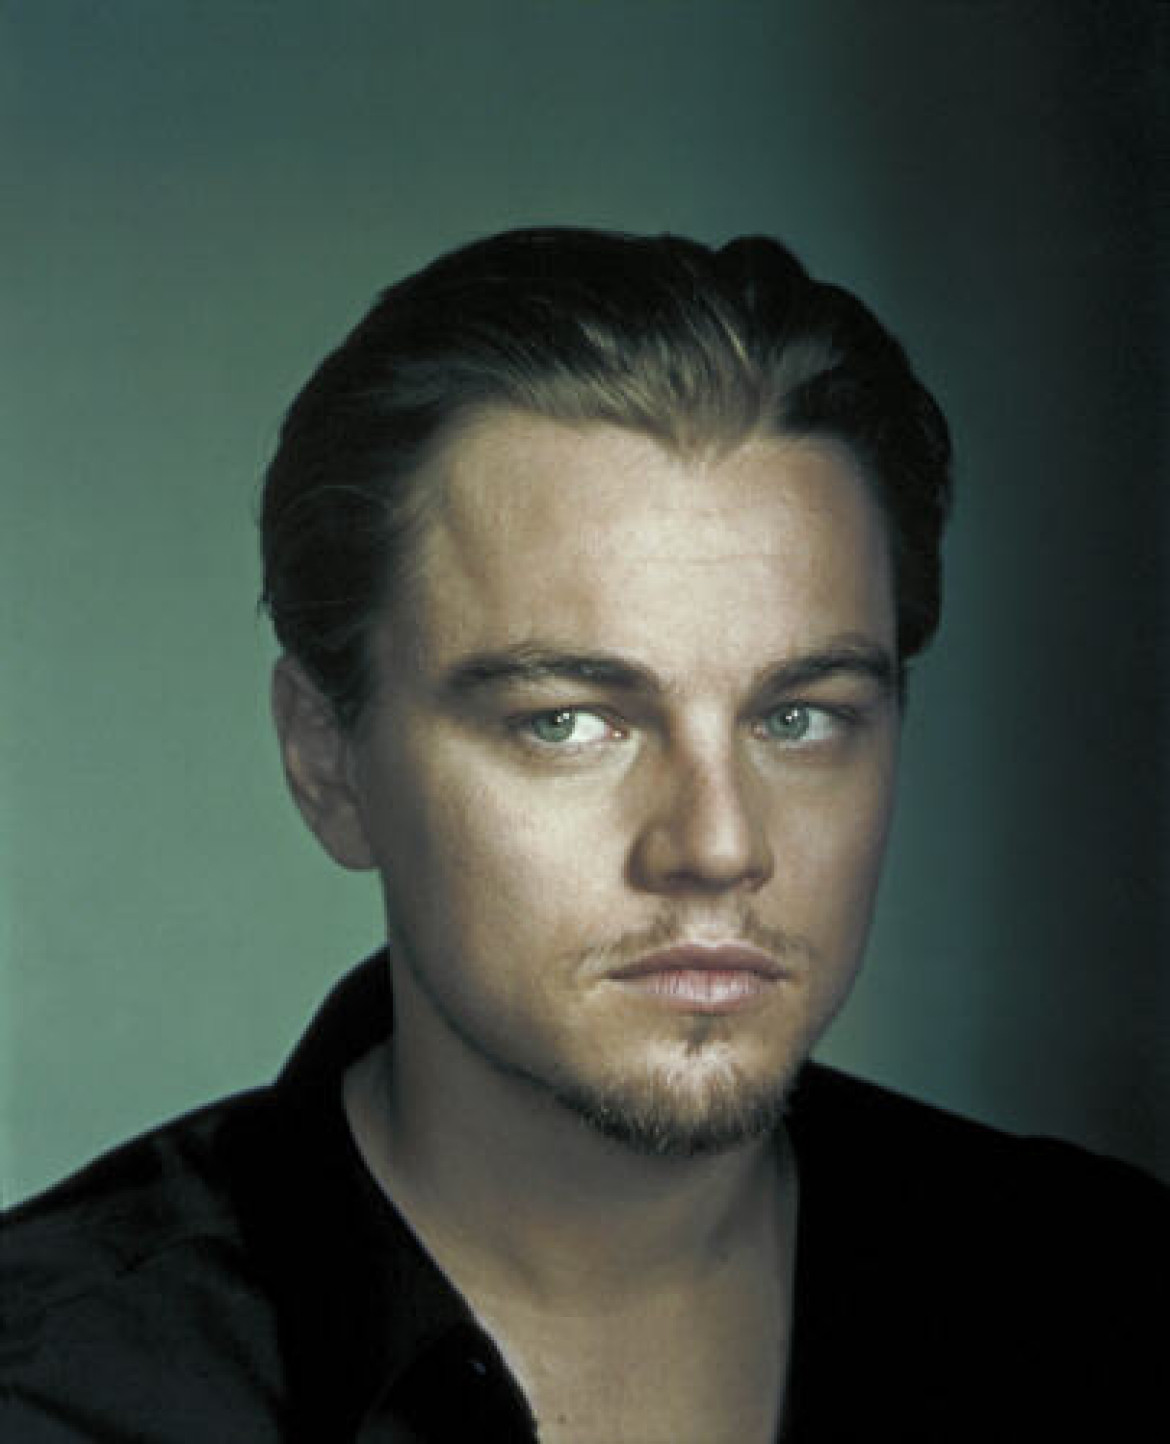 &#8220;Sztuka&#8221; 1. nagroda, fot. Dan Winters, USA, dla The New York Times Magazine. Leonardo DiCaprio.